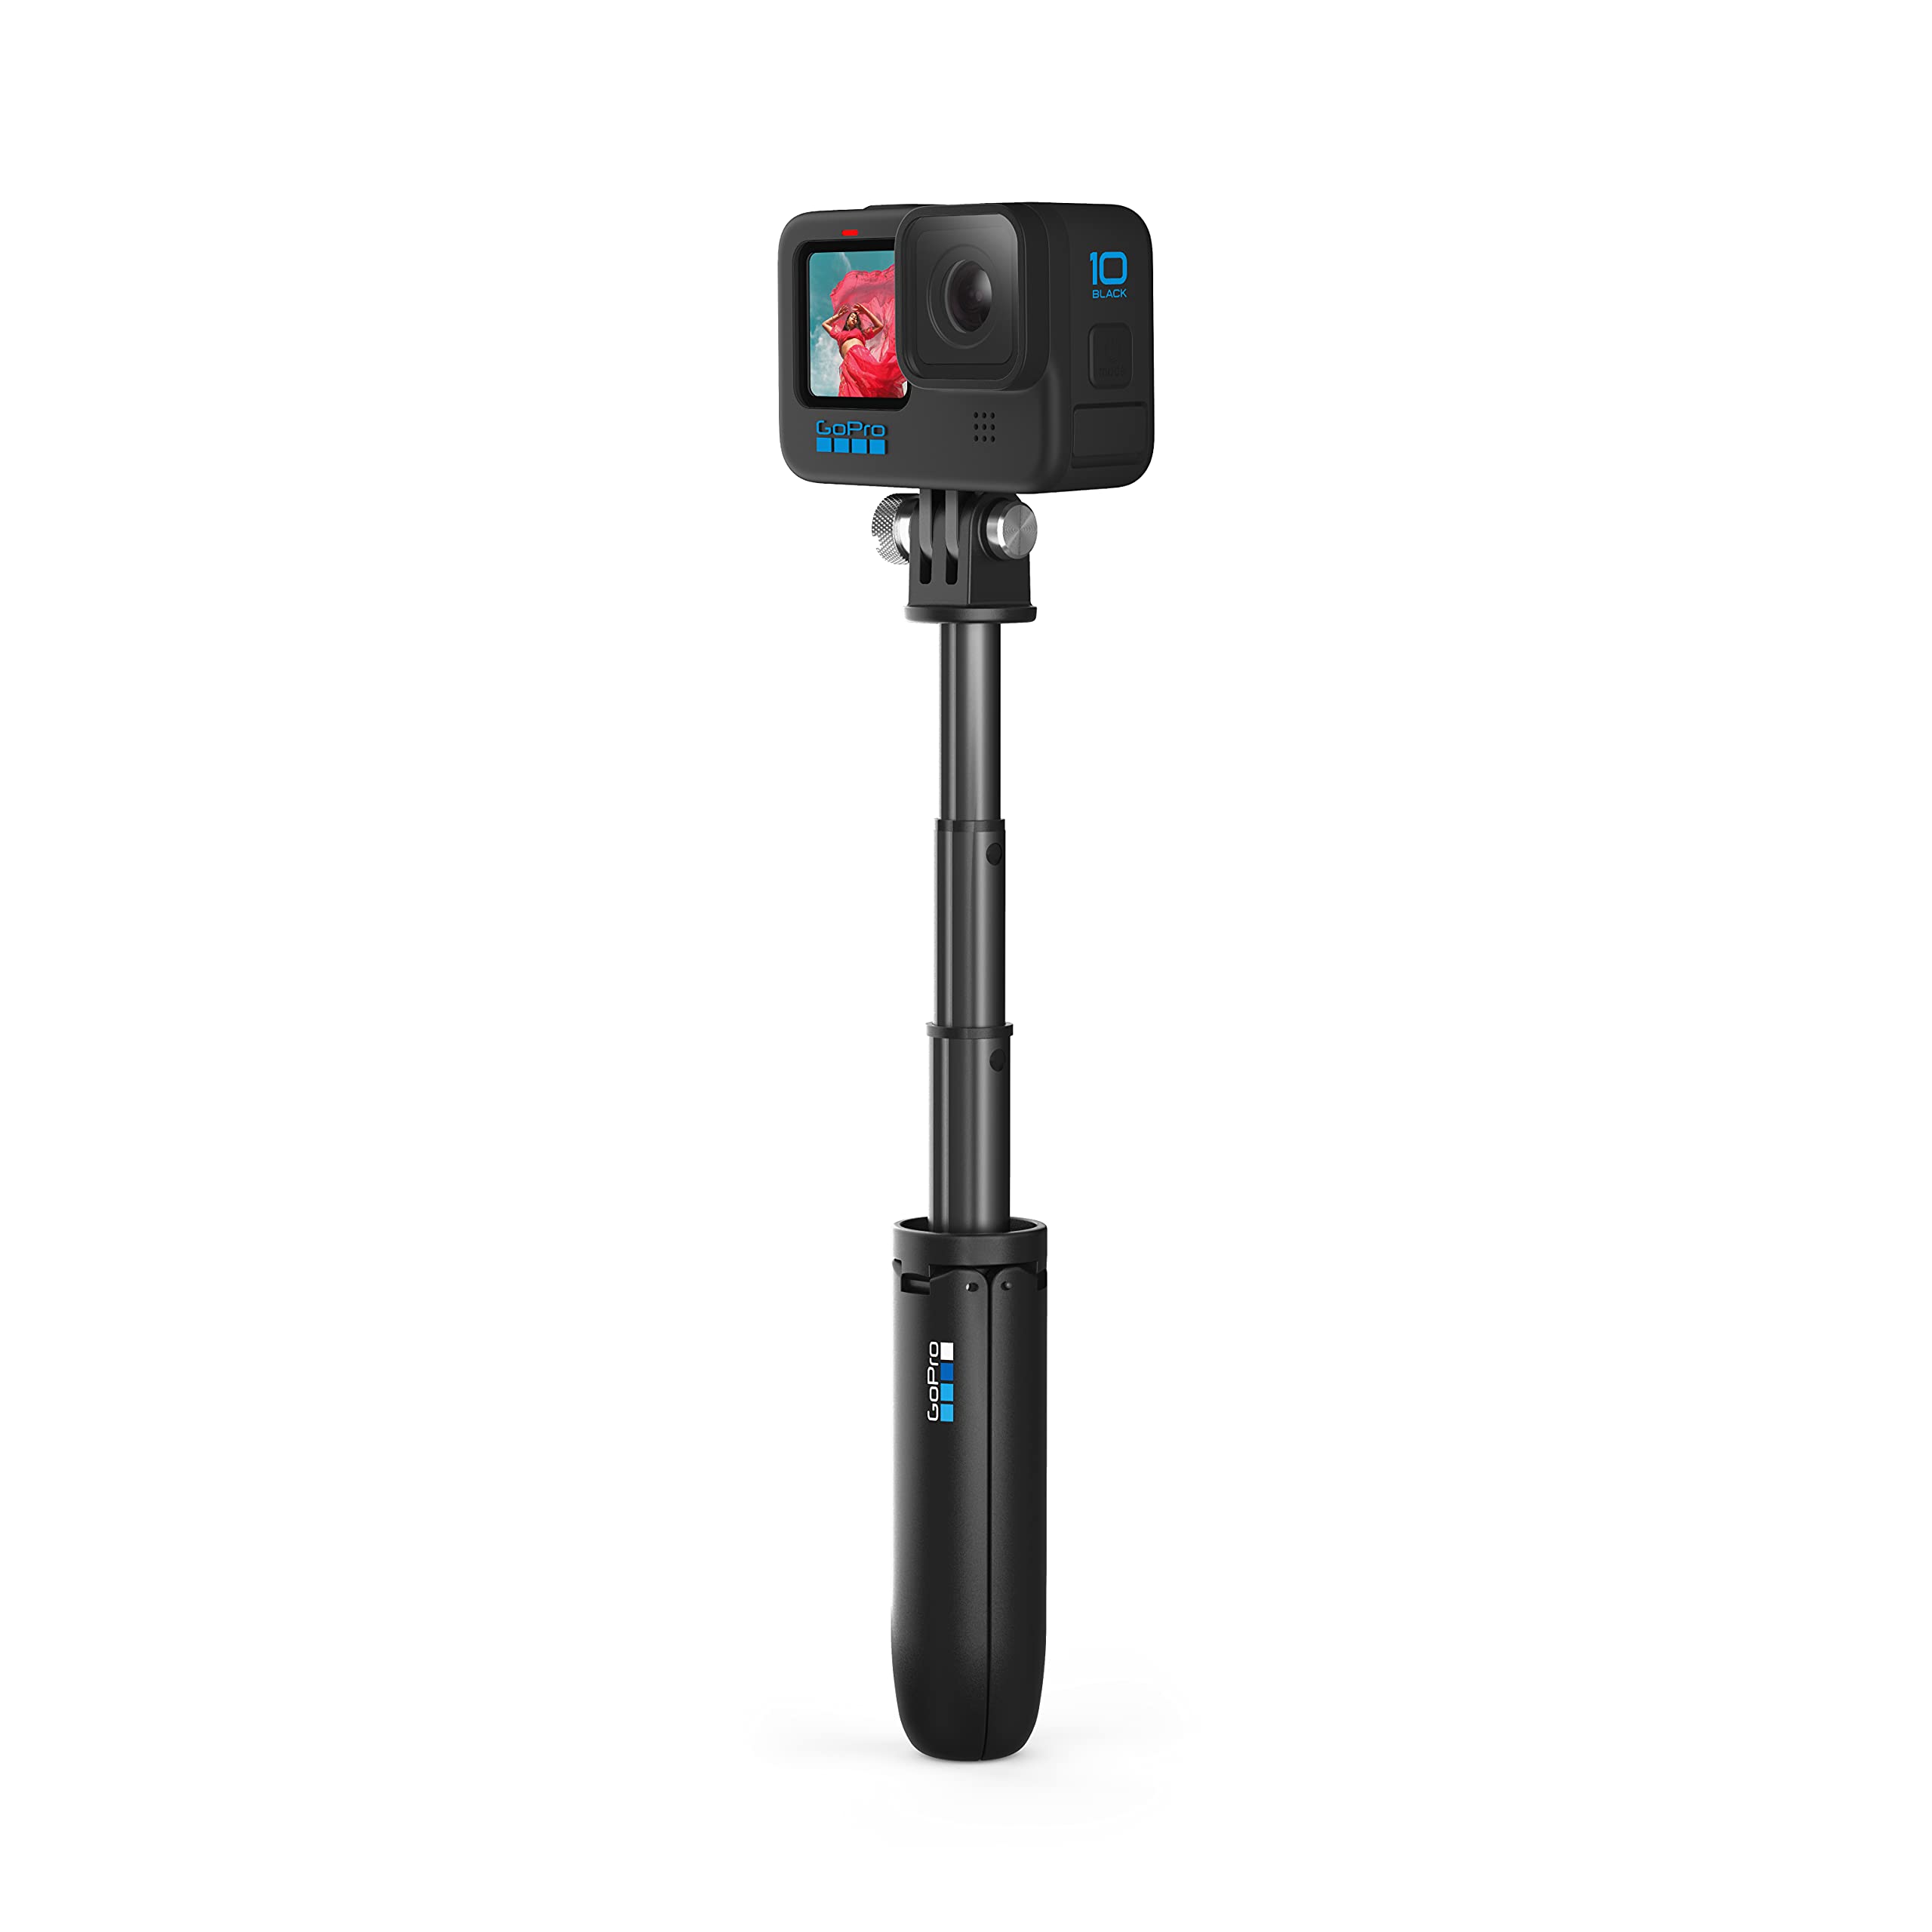 GoPro AFTTM-001 Shorty Mini Extension Pole with Tripod - Black (Official Accessory), 2.8 cm*3.2 cm*11.7 cm